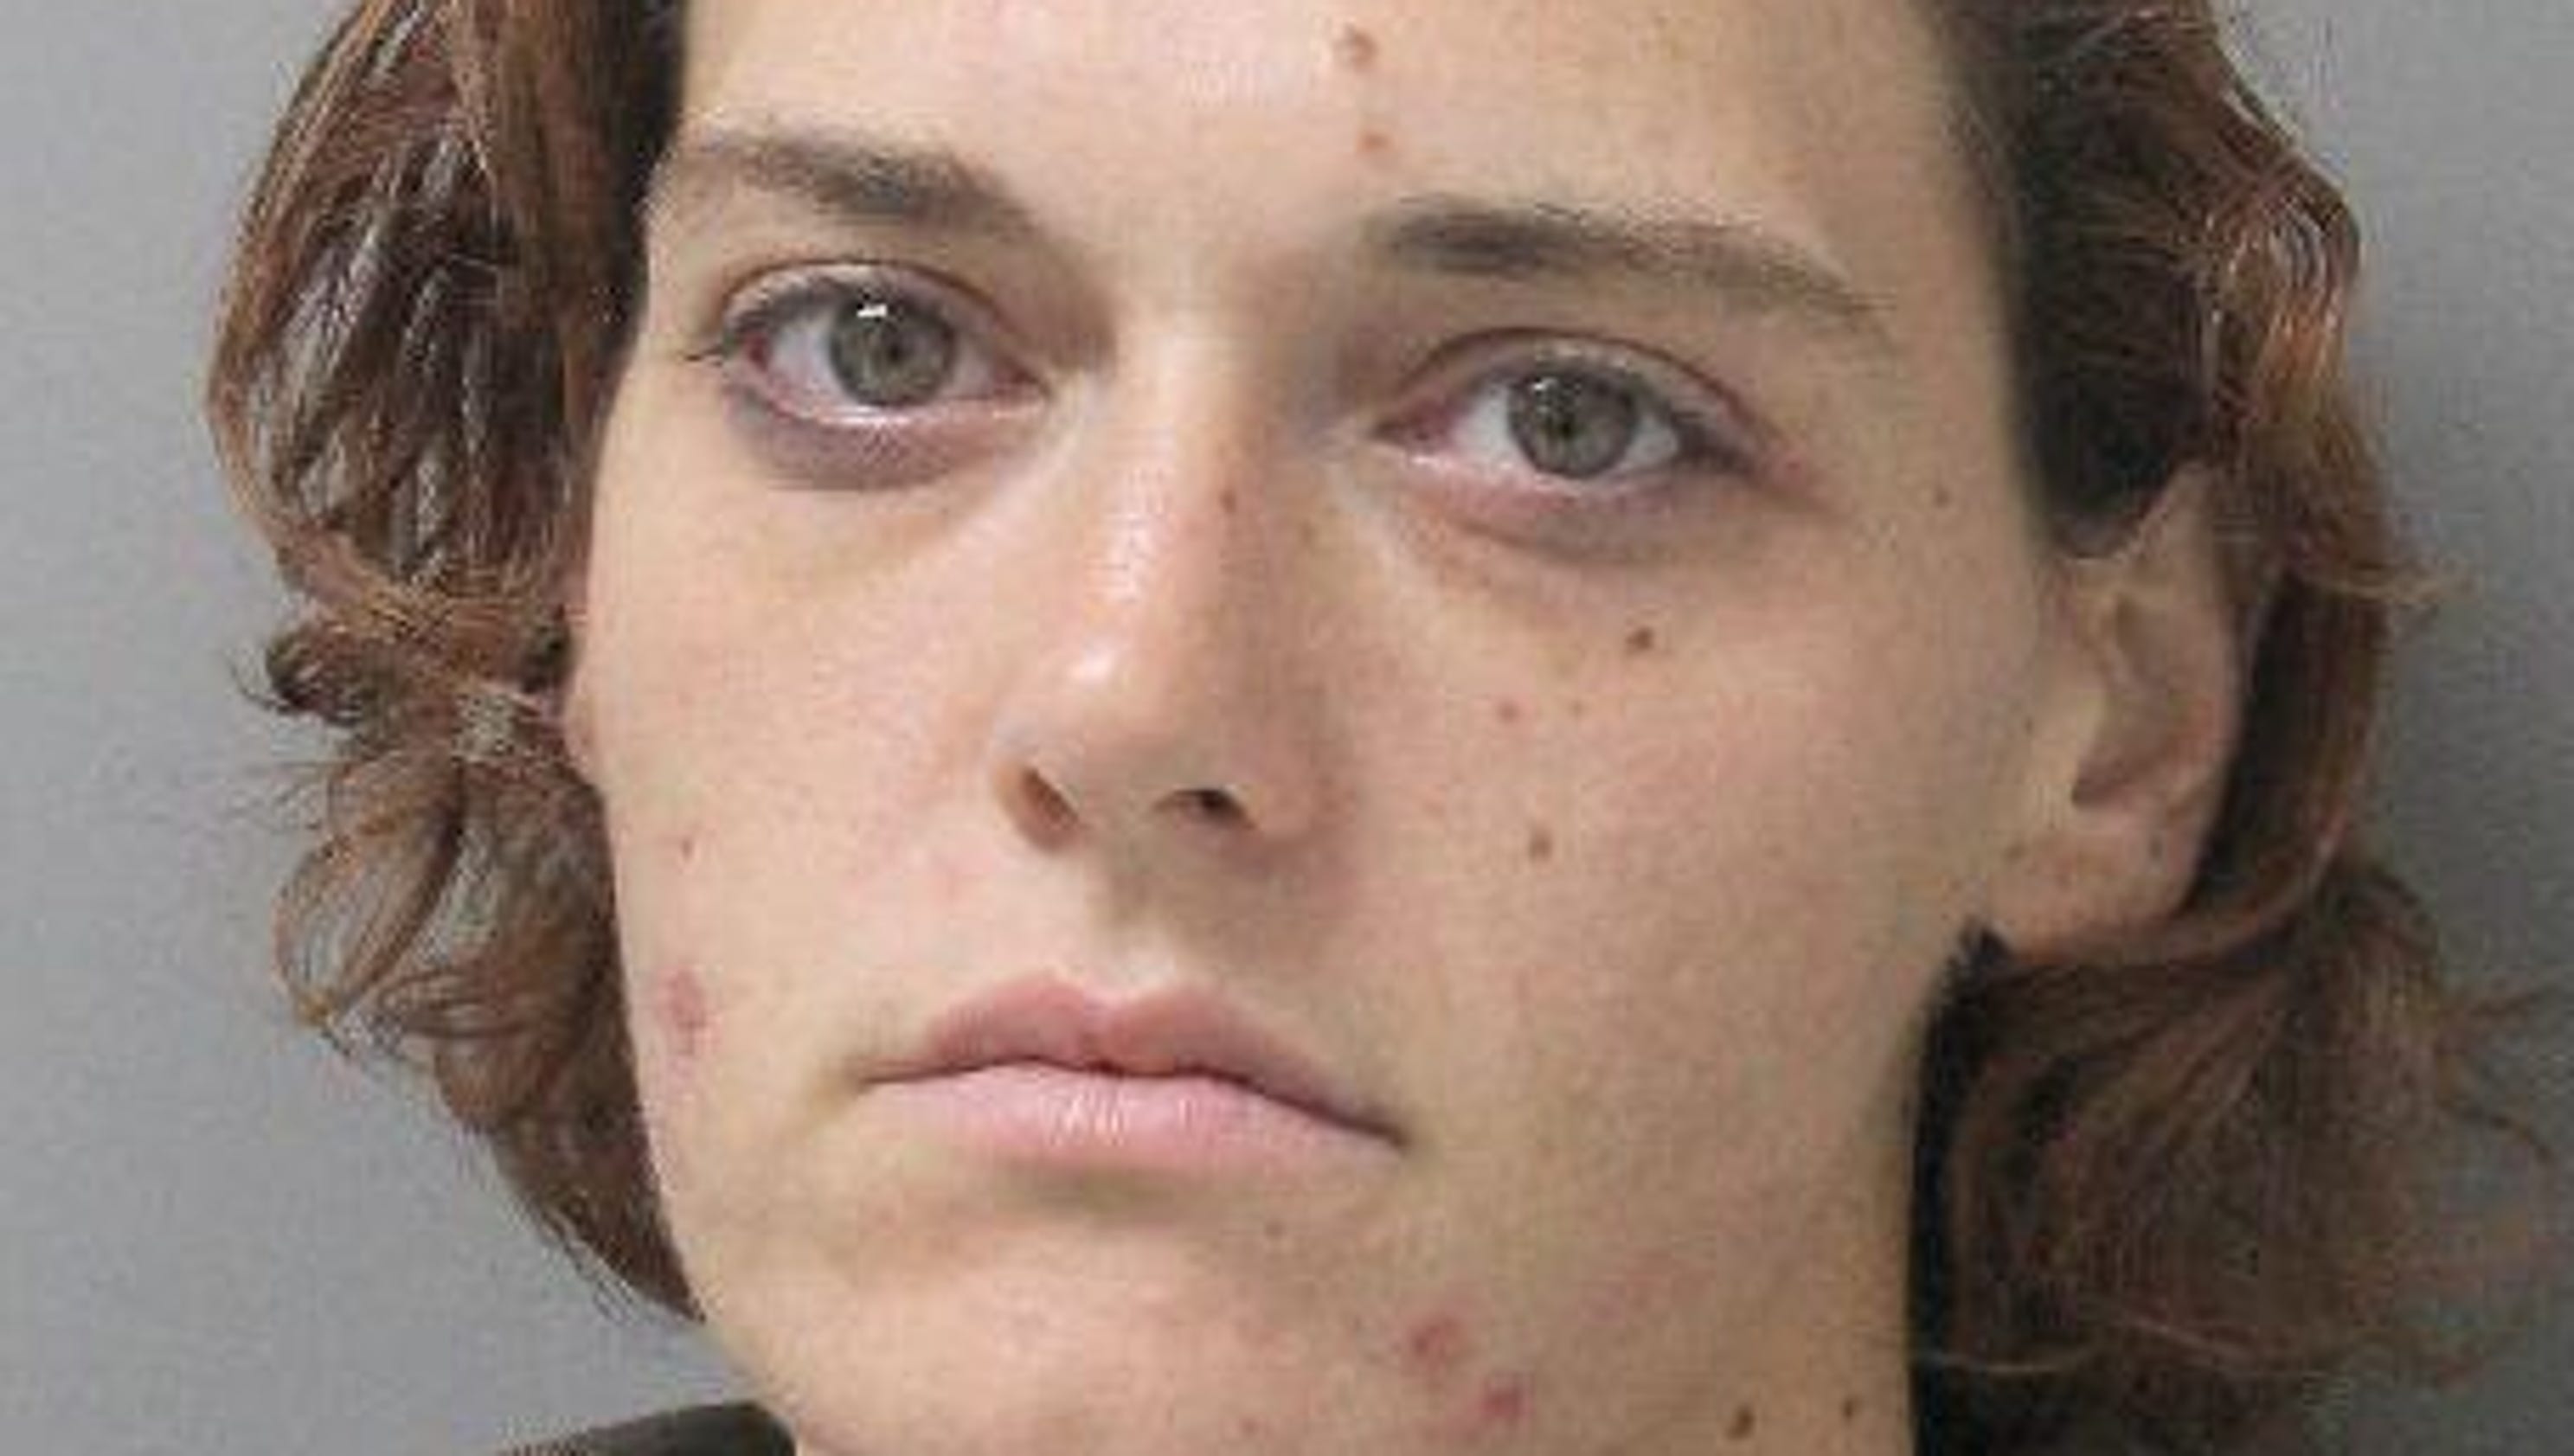 Lengthy Bathroom Visit Leads To Meth Arrest For Bernice Woman